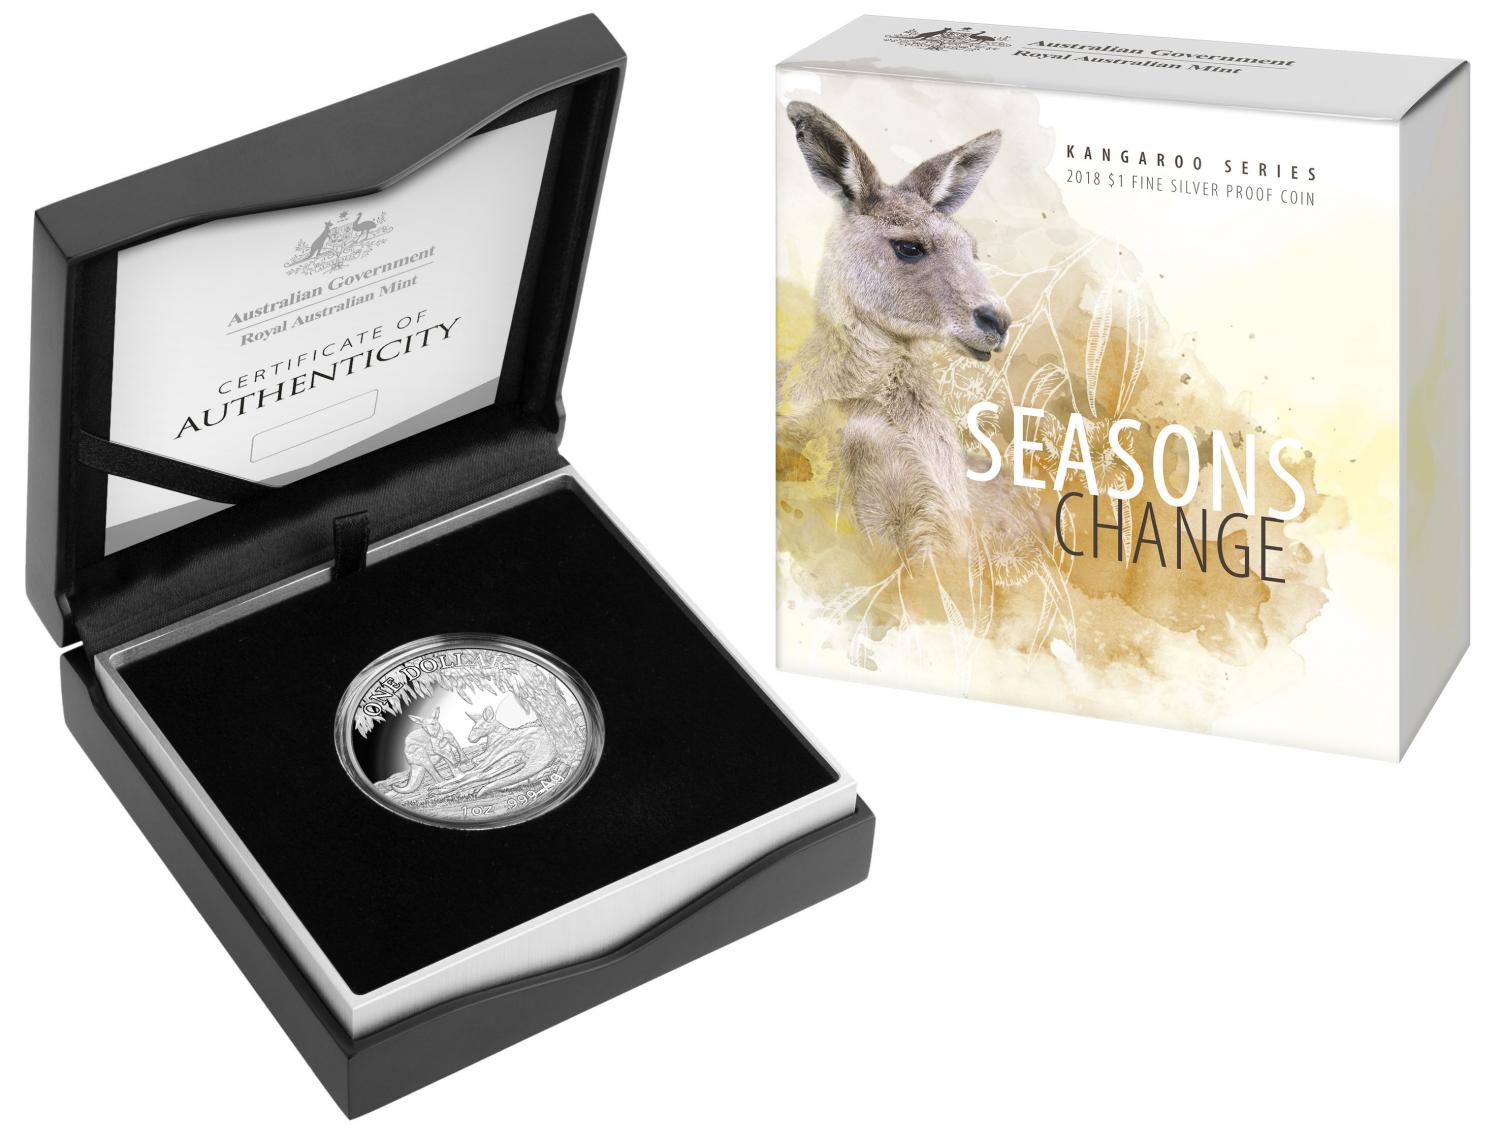 Thumbnail for 2018 $1 Fine Silver Proof Coin - Kangaroo Series Seasons Change